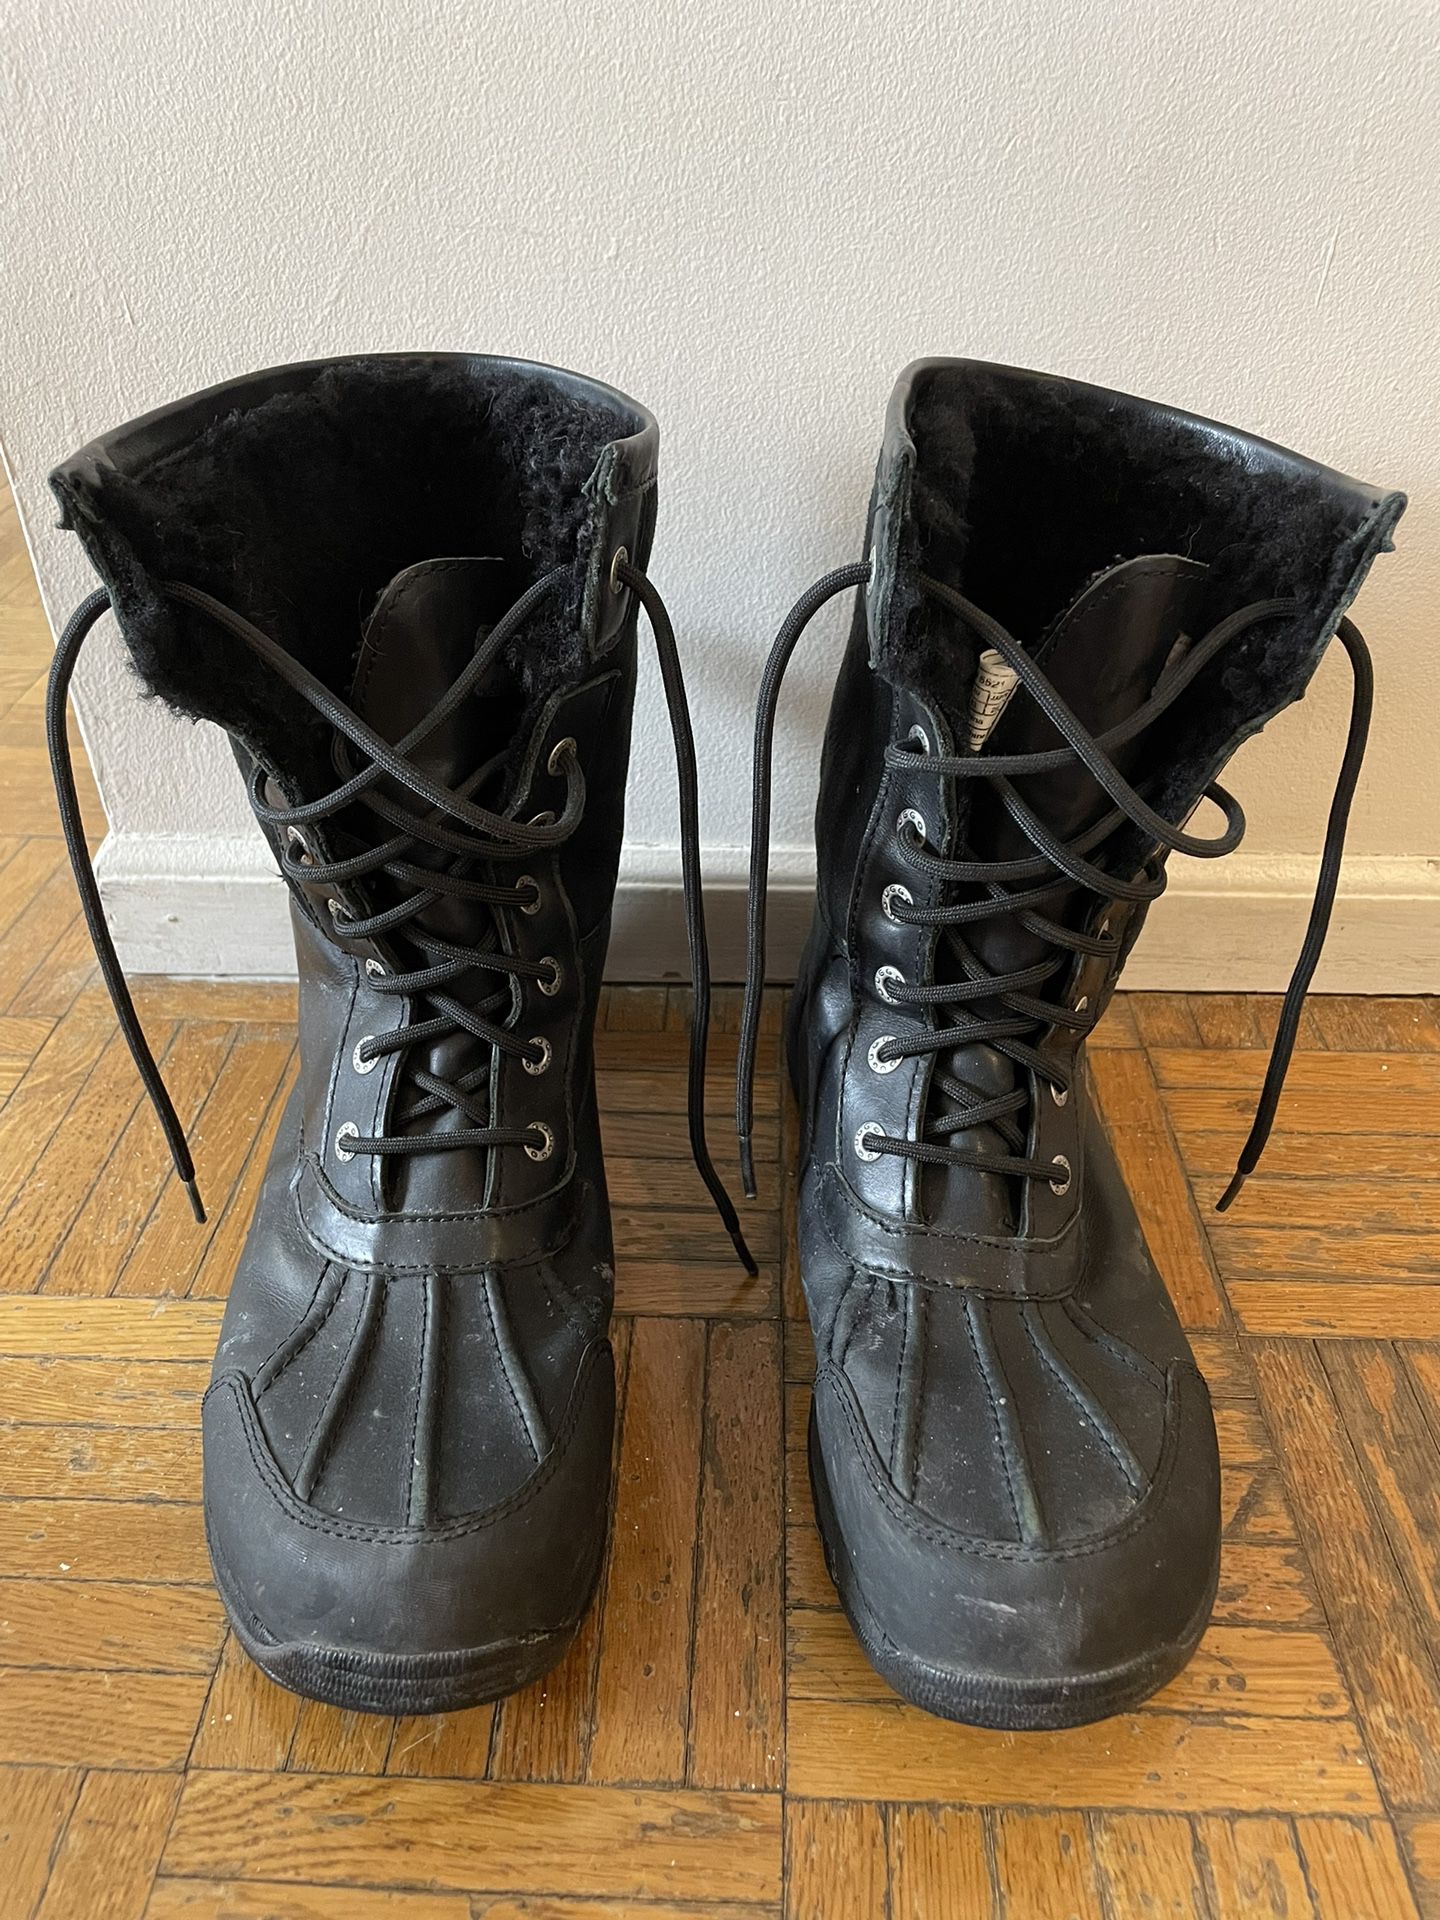 Ugg men’s black winter boots size 10